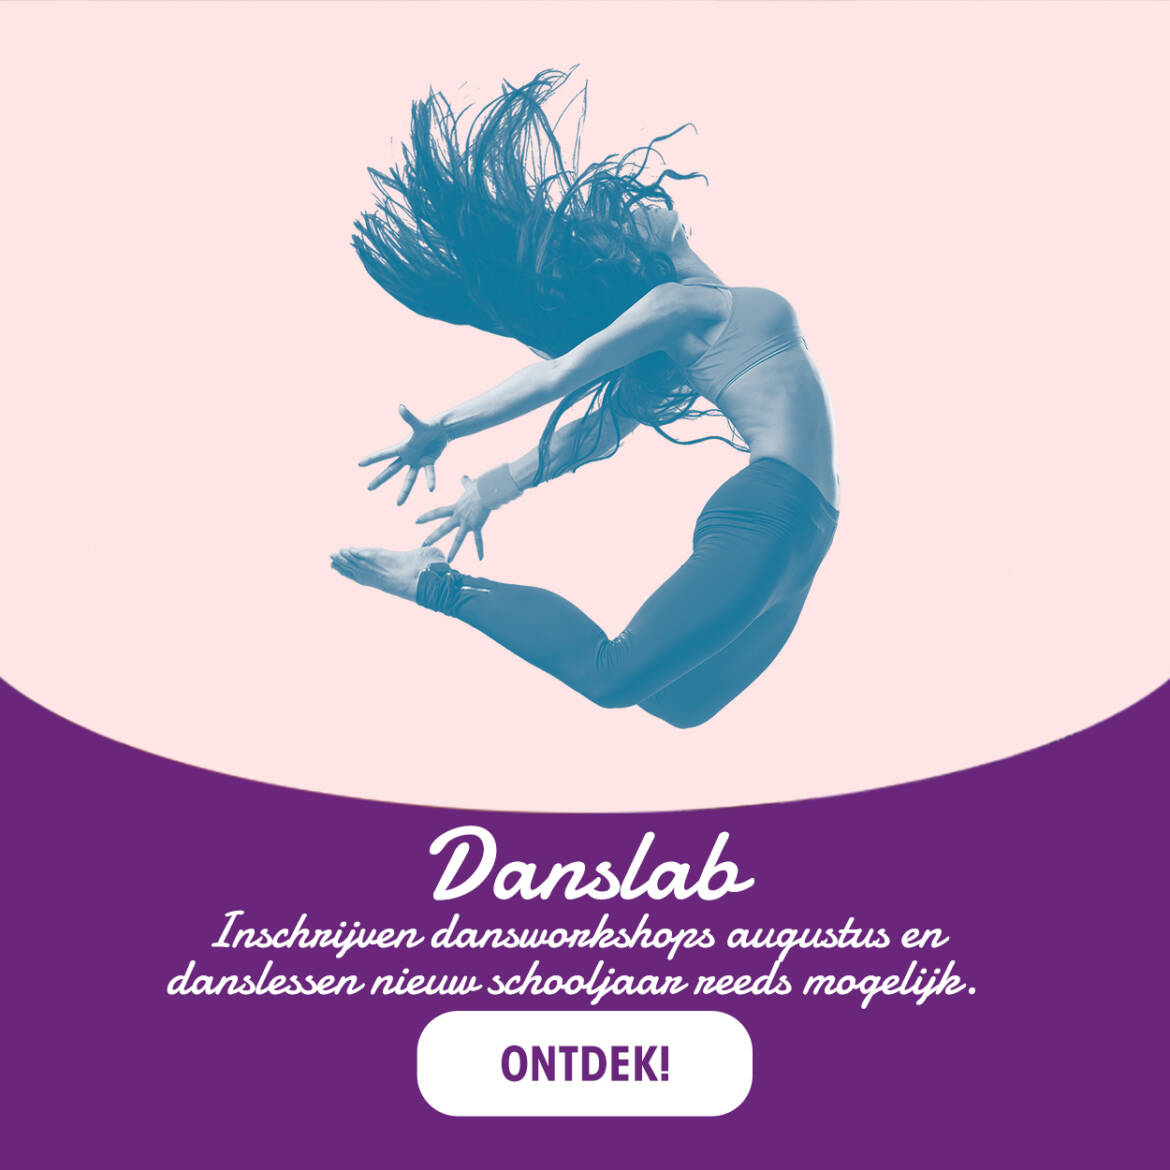 DANSLAB-2020-1.jpg